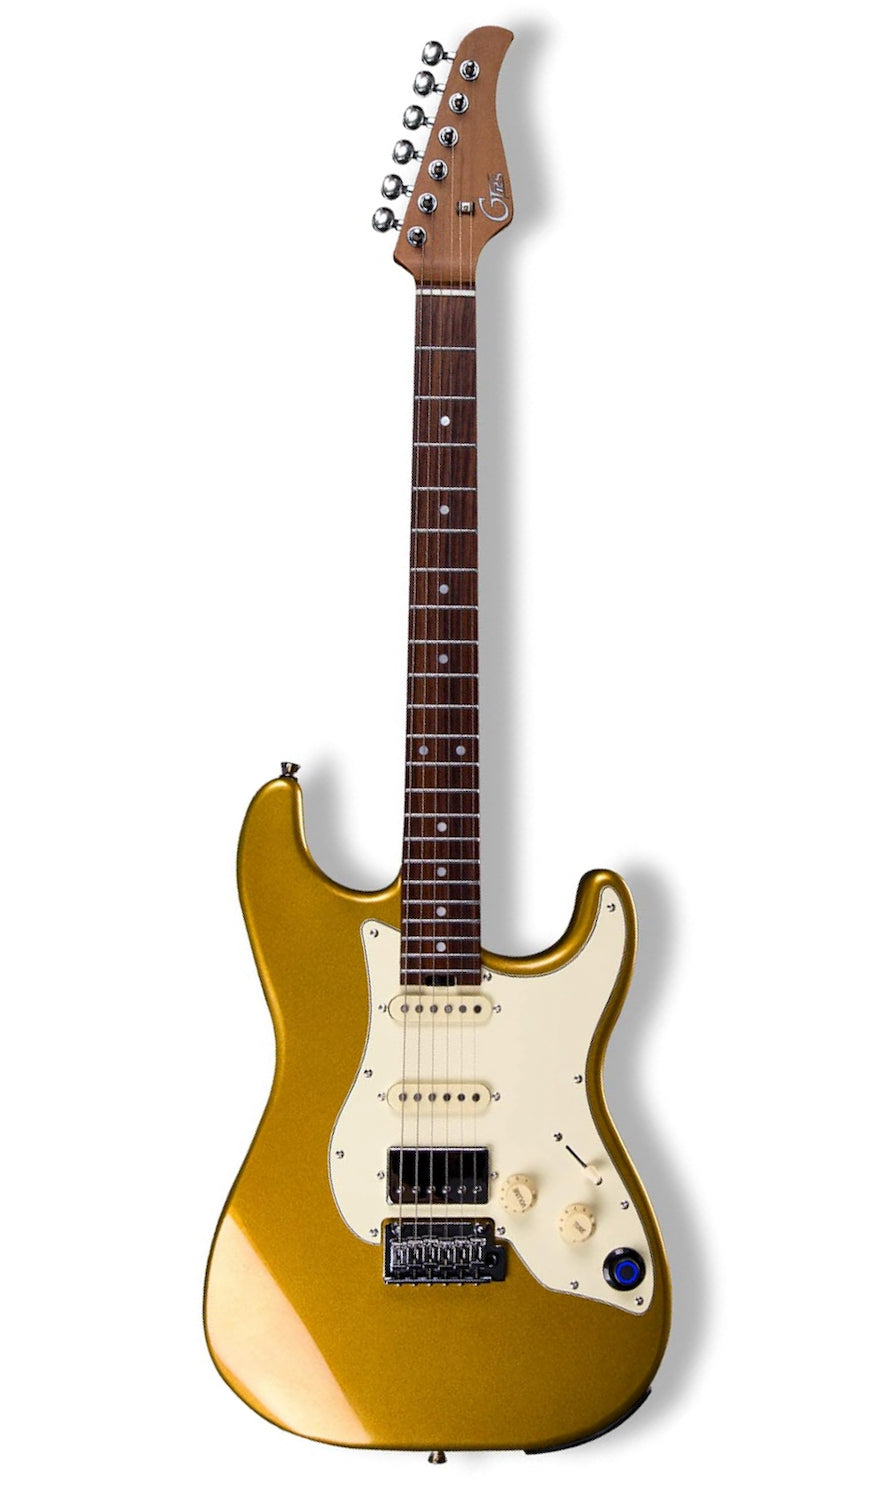 Mooer GTRS S800 Intelligent Electric Guitar w/bag - Gold